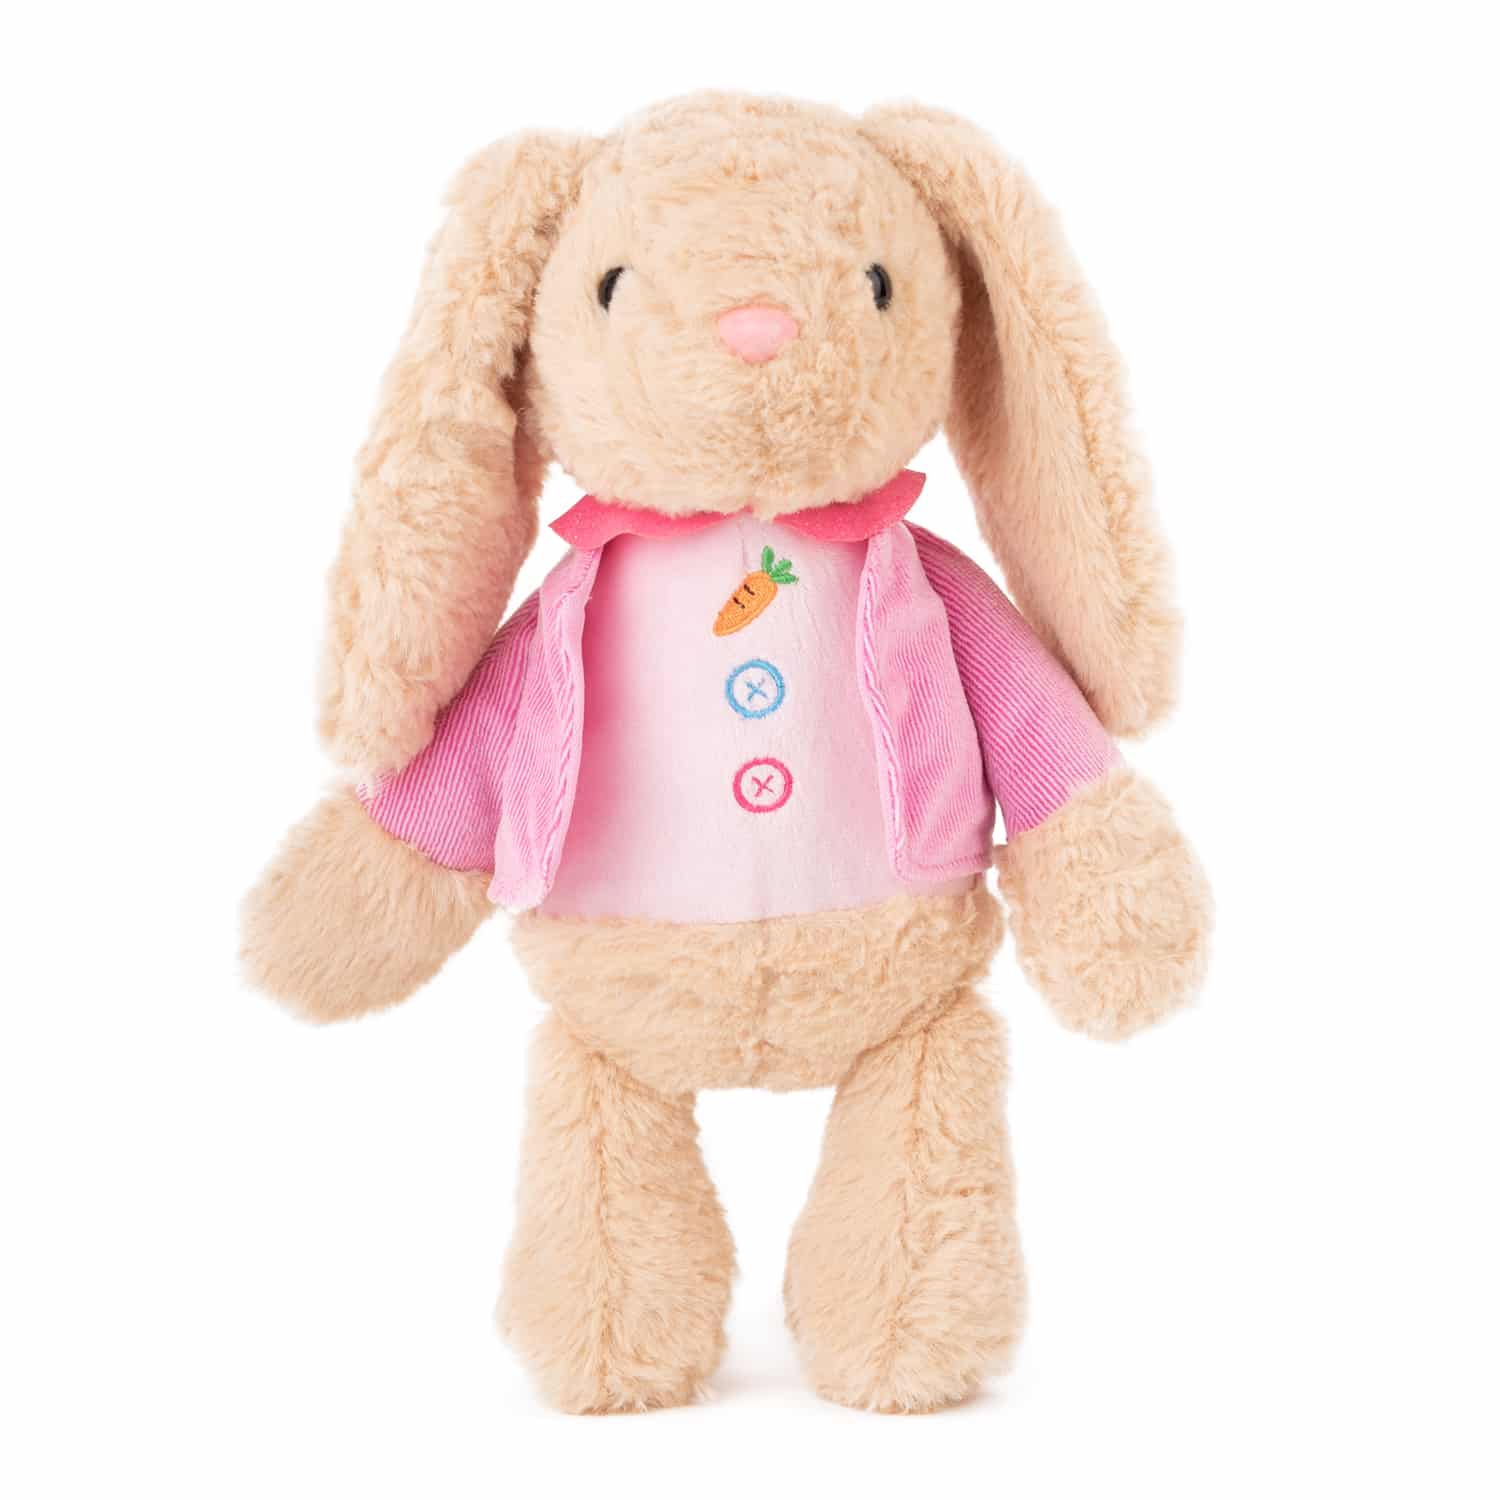 Rabbit - Beige with a pink vest